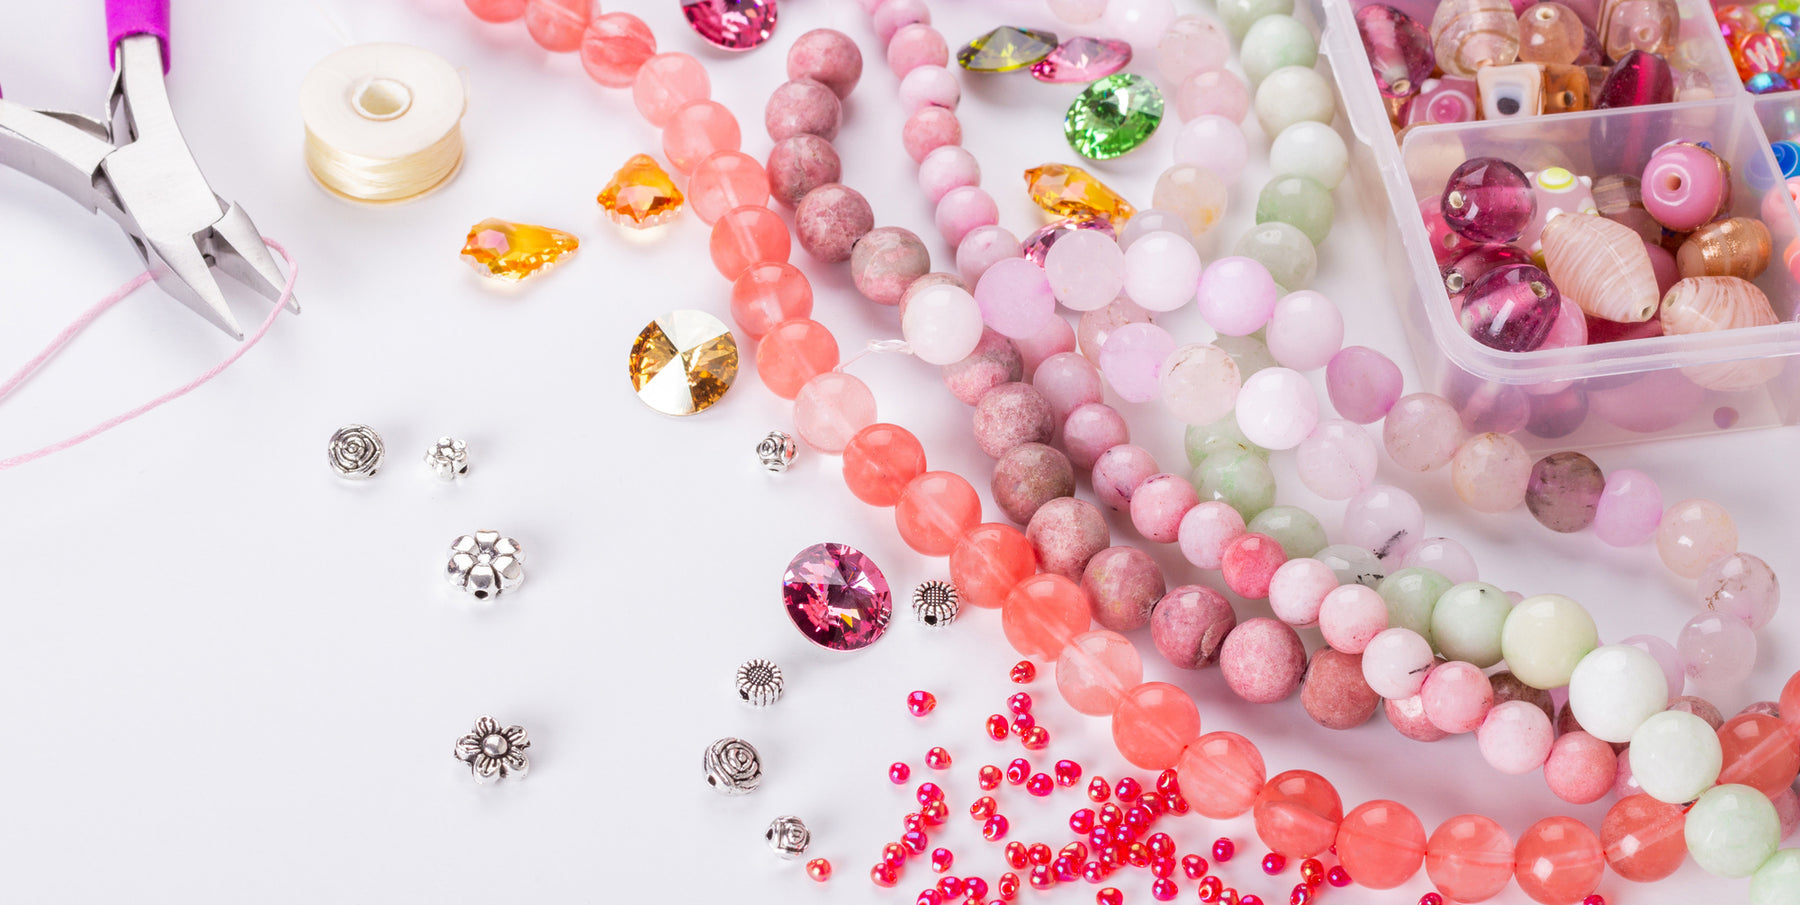 Beads & Jewelry In Bulk